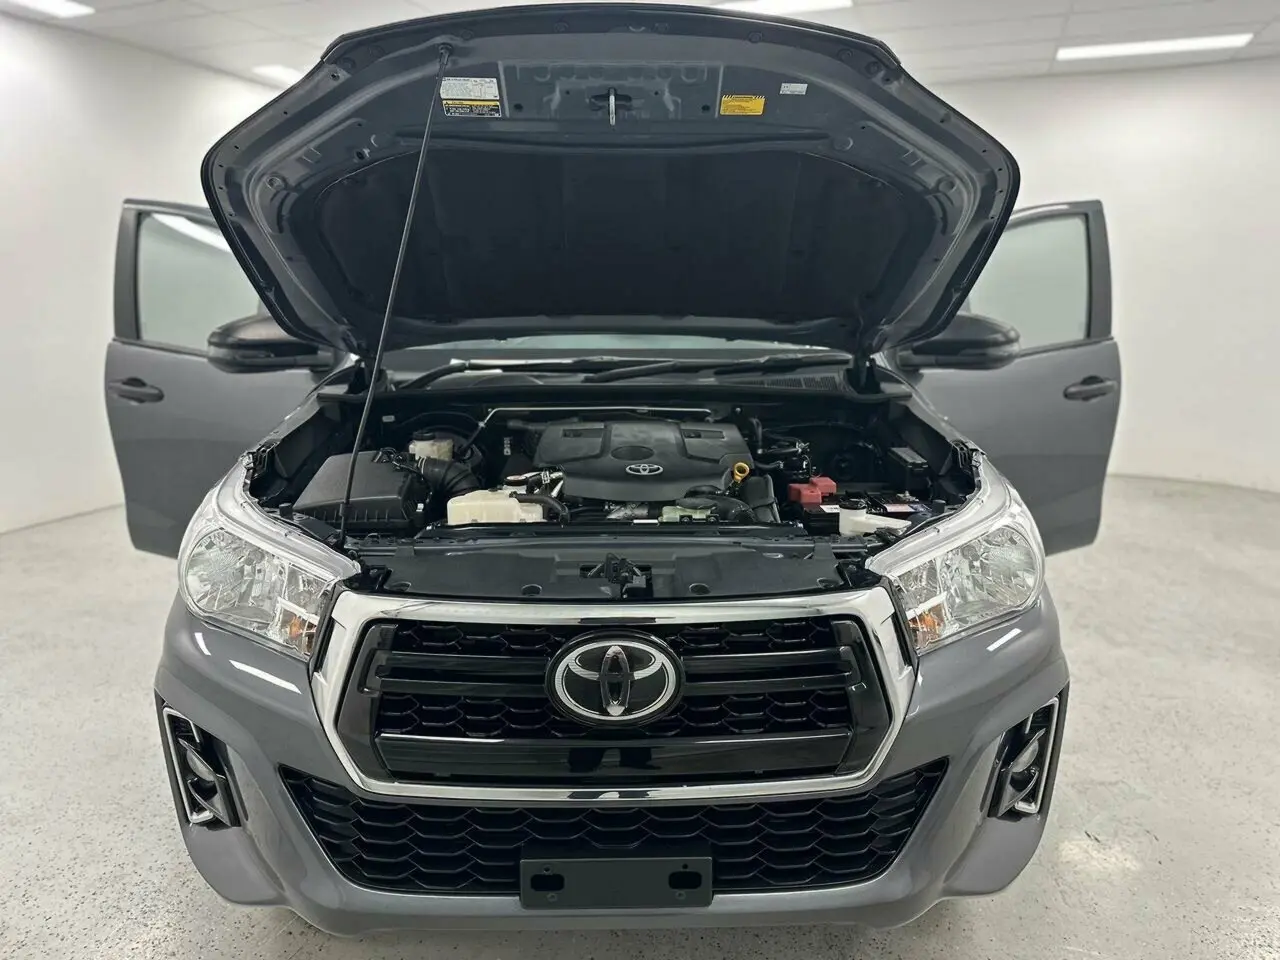 2019 Toyota Hilux Image 10